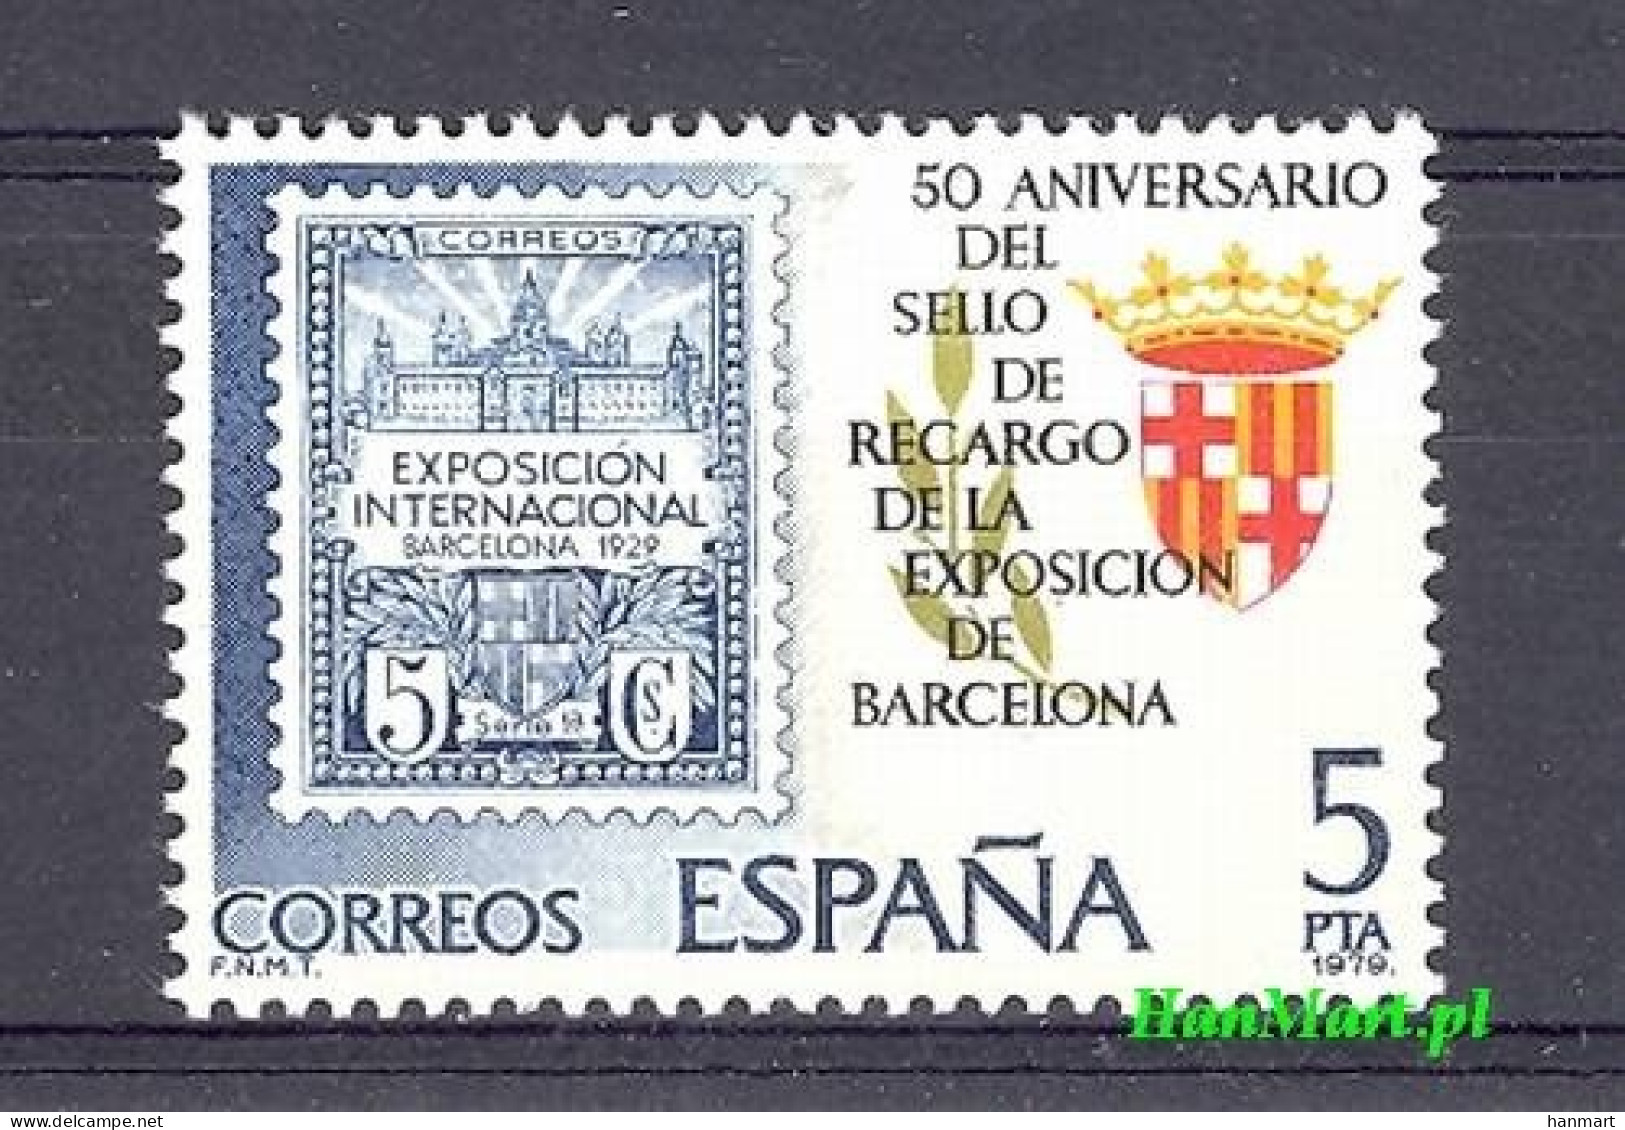 Spain 1979 Mi 2441 MNH  (ZE1 SPN2441) - Postzegels